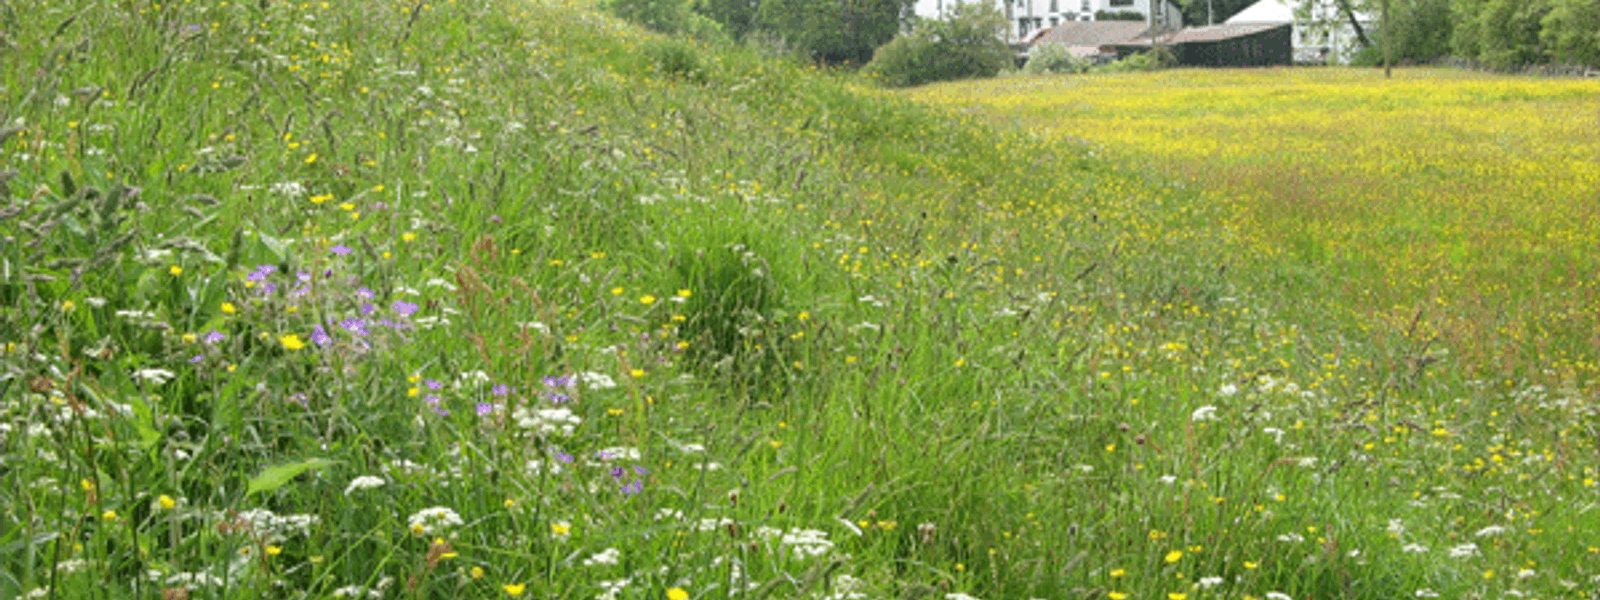 North Pennines NL - Nectarworks, Flower rich meadow